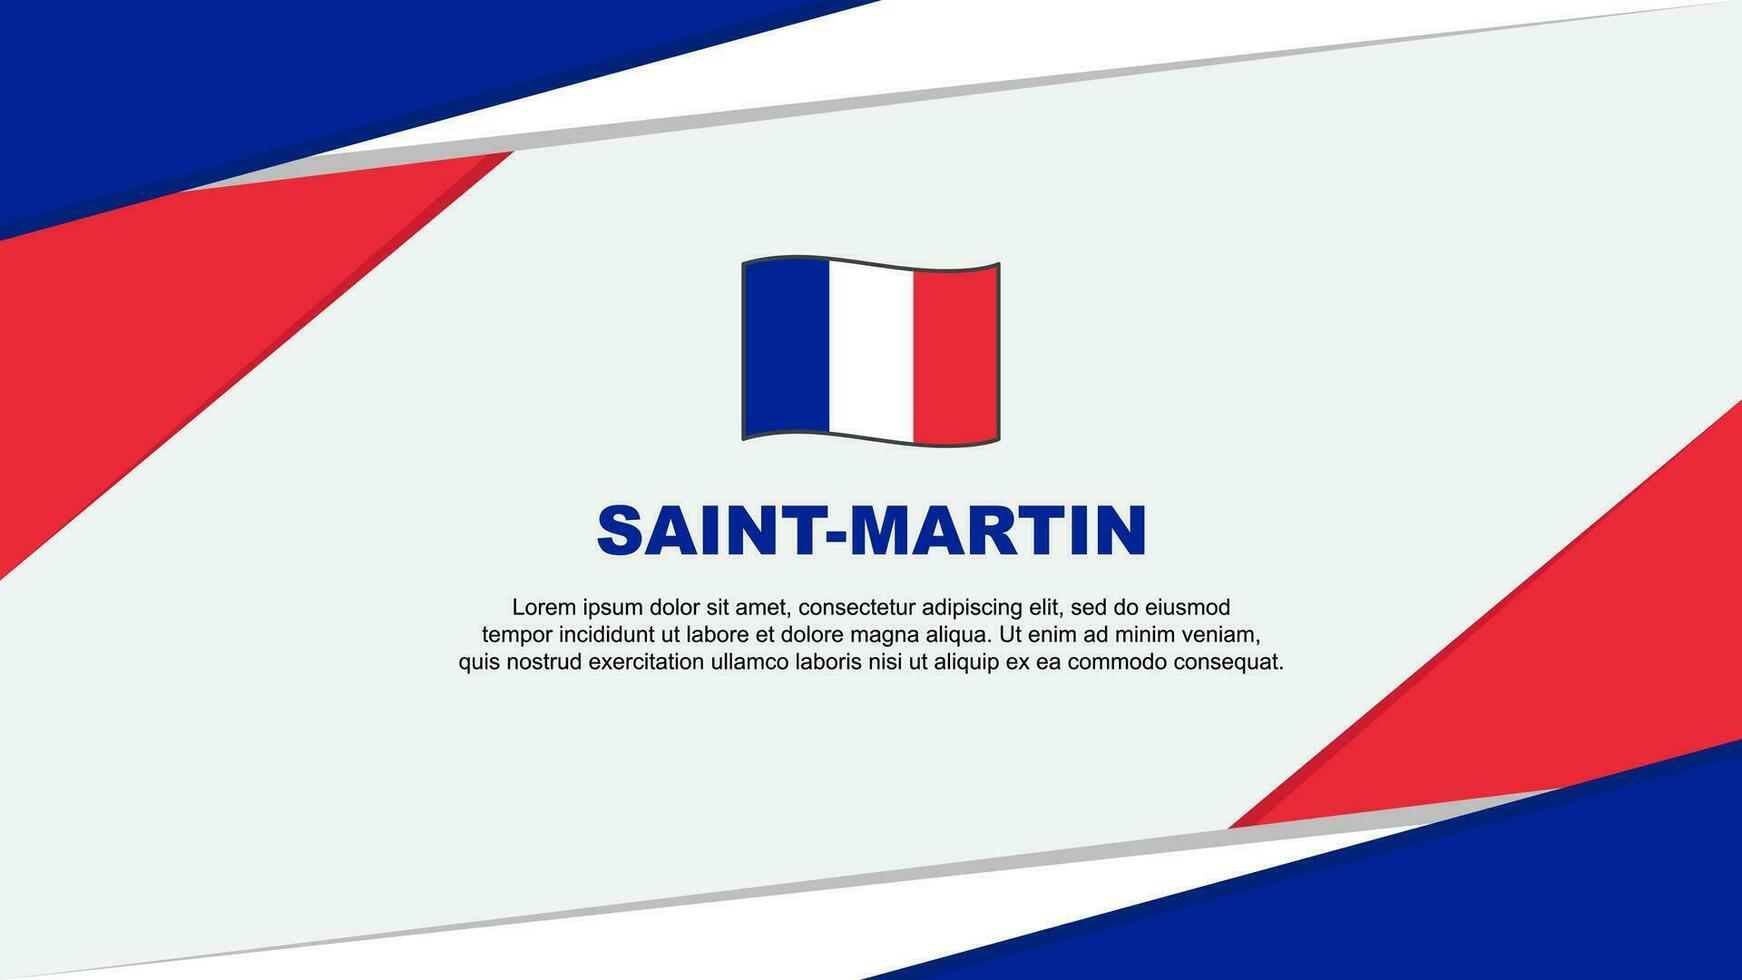 Saint Martin Flag Abstract Background Design Template. Saint Martin Independence Day Banner Cartoon Vector Illustration